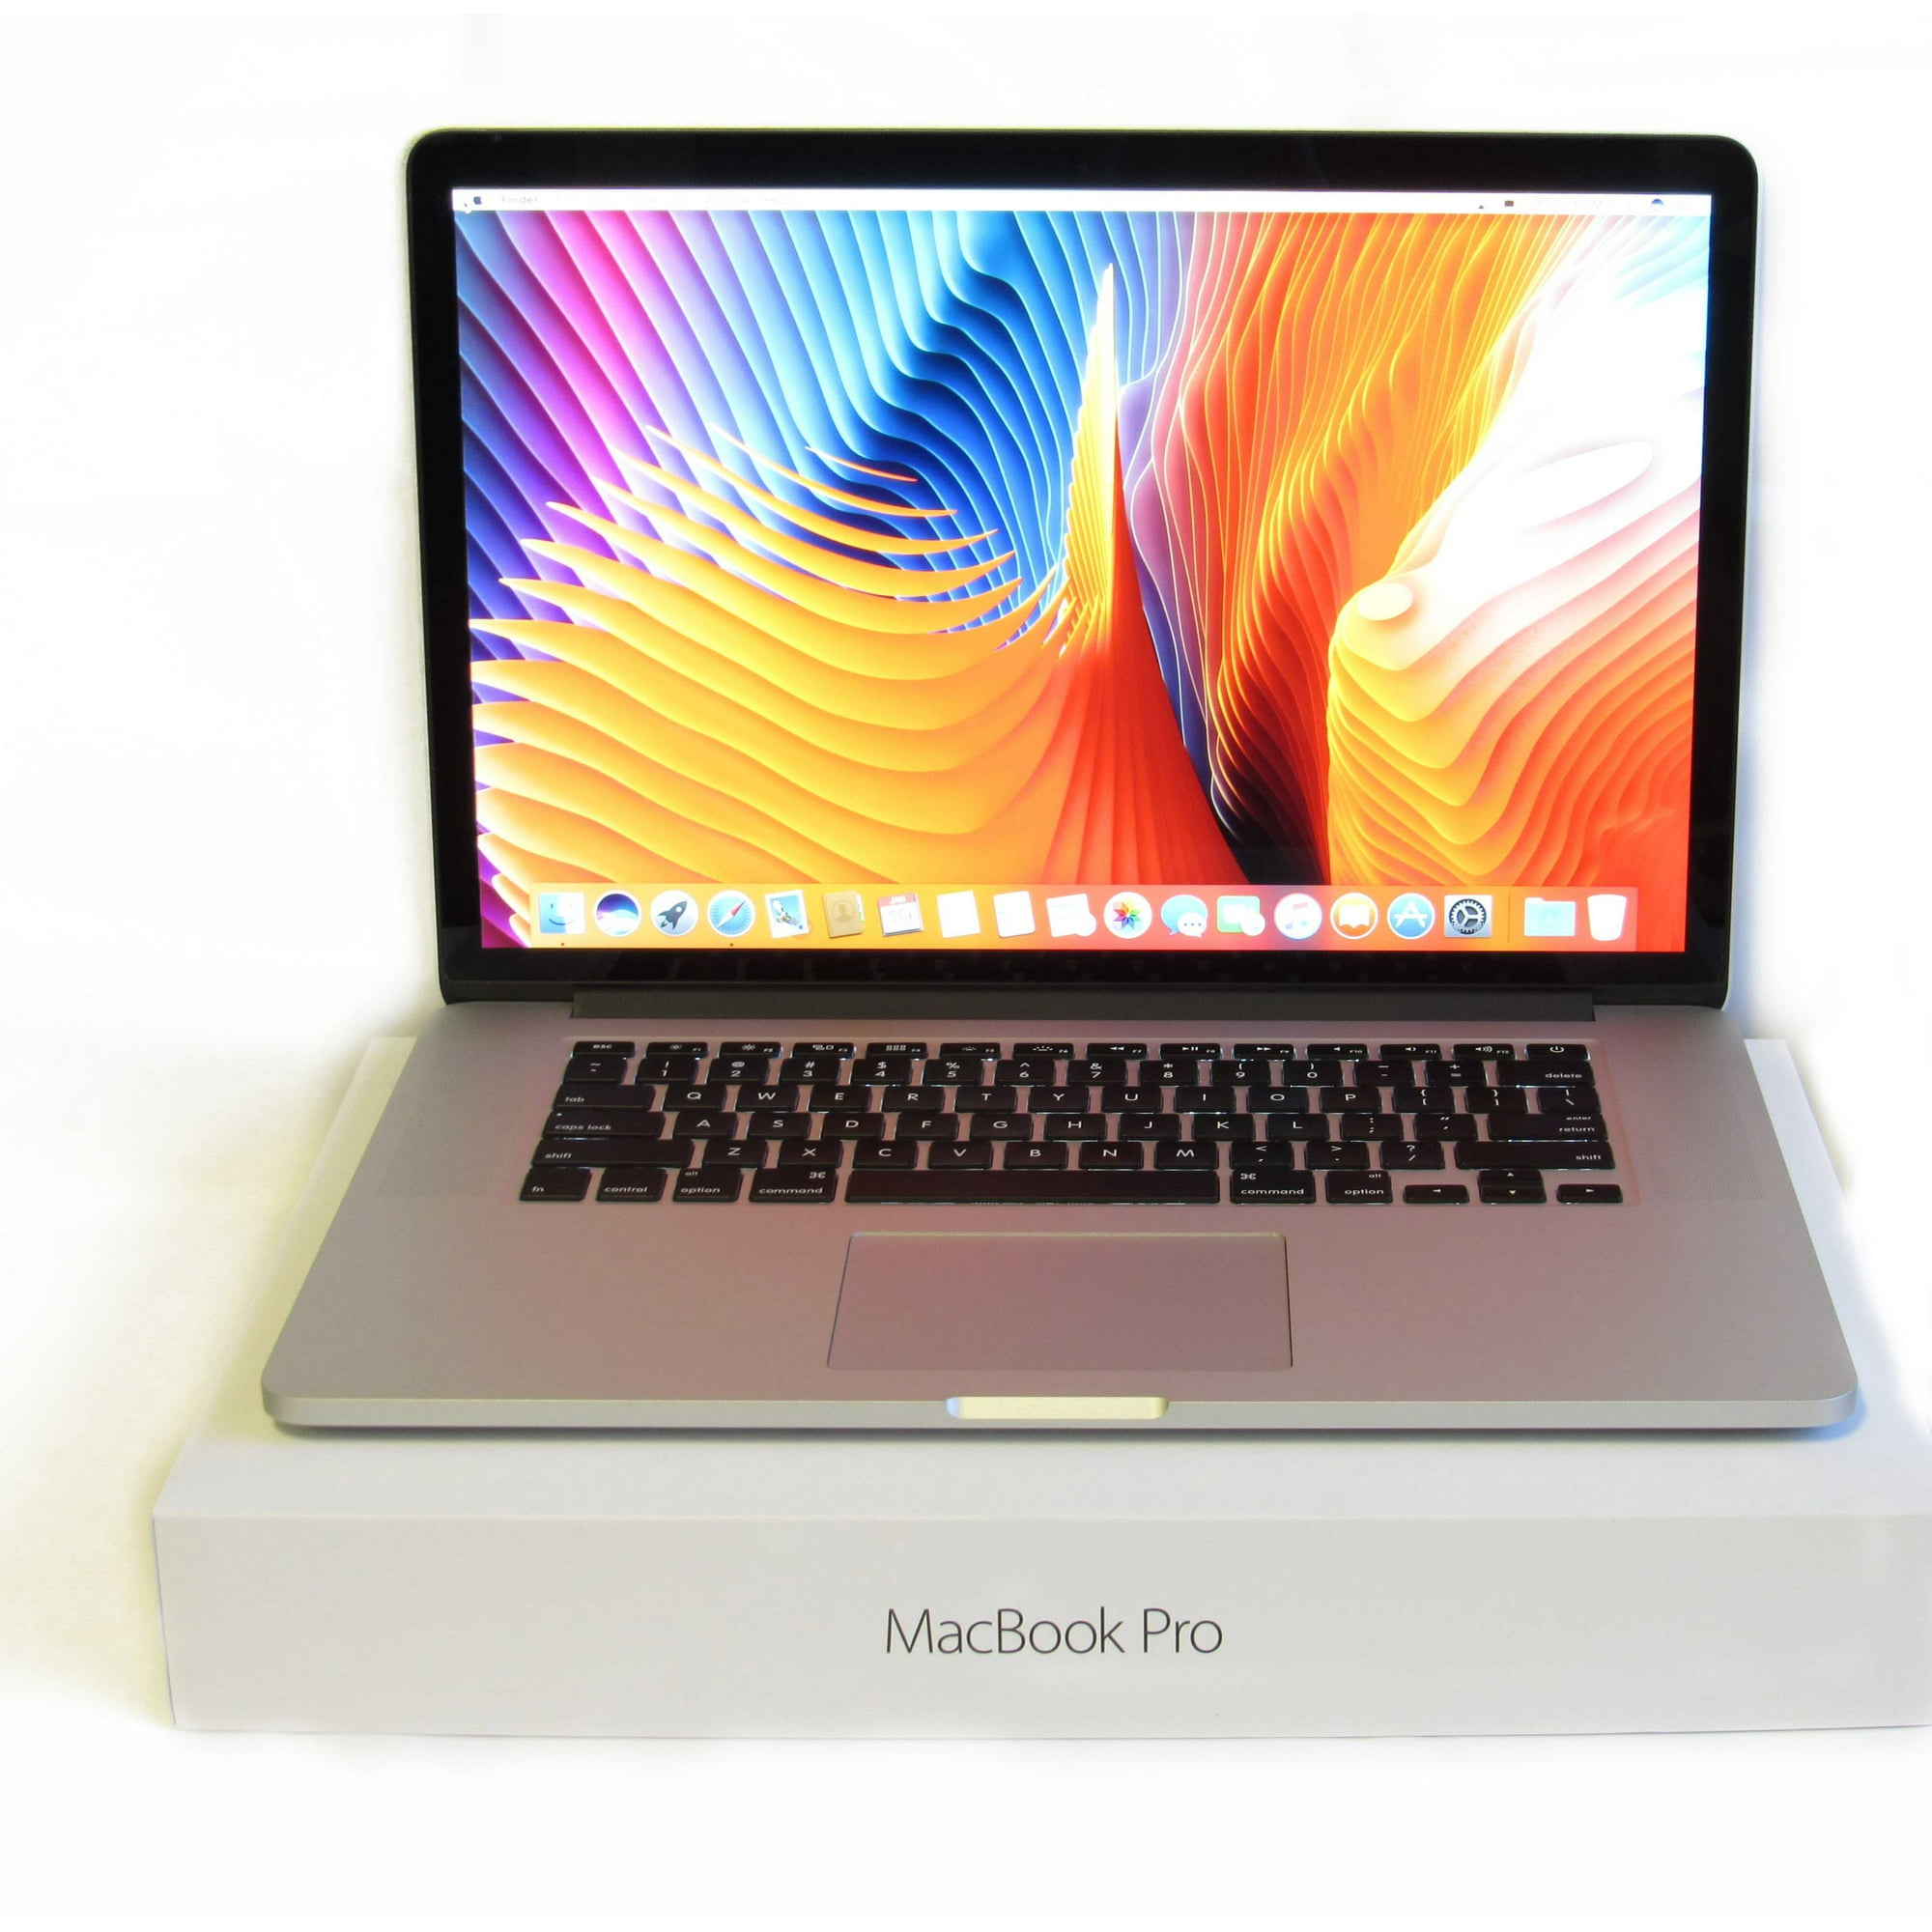 Apple MacBook Pro 15-Inch Retina Laptop i7 2.5GHz - 3.7GHz / 16GB Ram / 1TB SSD / Radeon R9 M370X 2GB Video / OS X Mojave / Thunderbolt / HDMI / MJLT2LL/A (Used) - Walmart.com